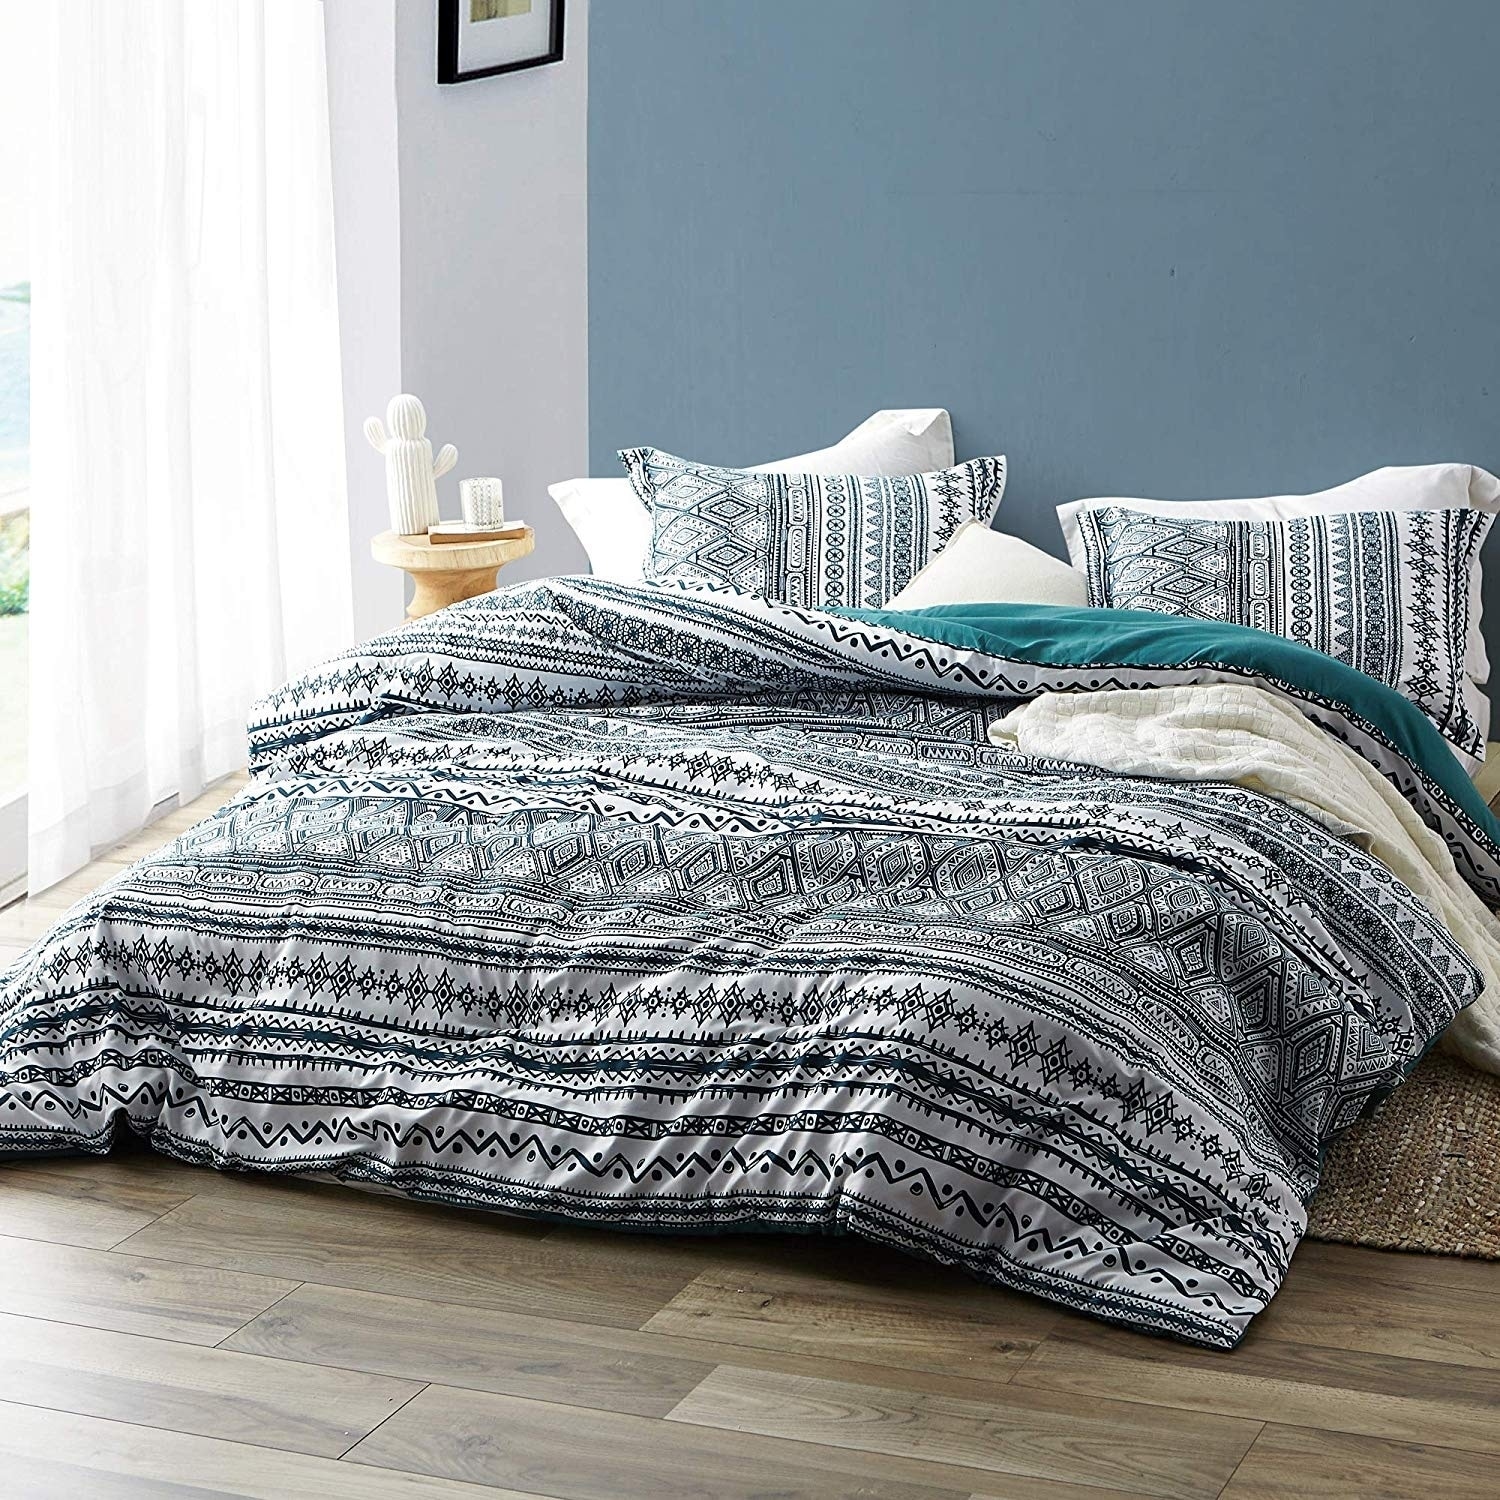 Zanzibar Teal Oversized Comforter Supersoft Microfiber Bedding On Sale Overstock 27070099 King 3 Piece